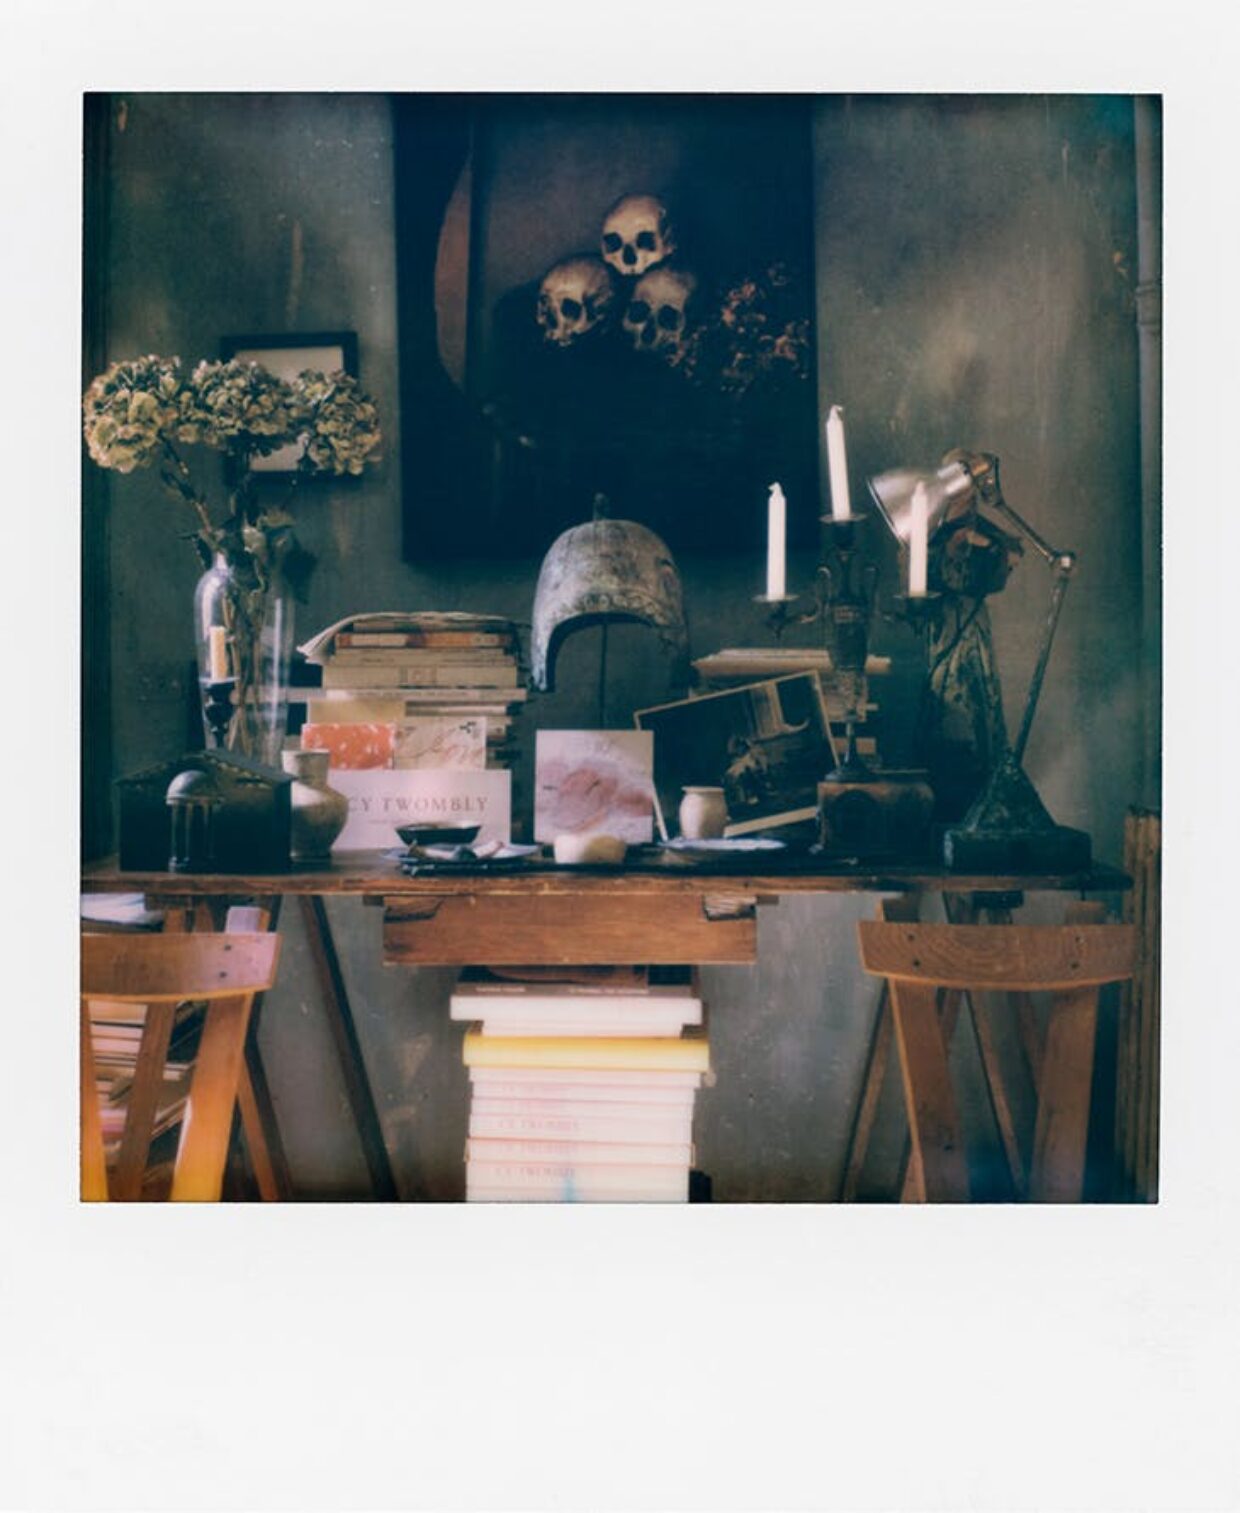 The poetry of Polaroids, chez François Halard | 3